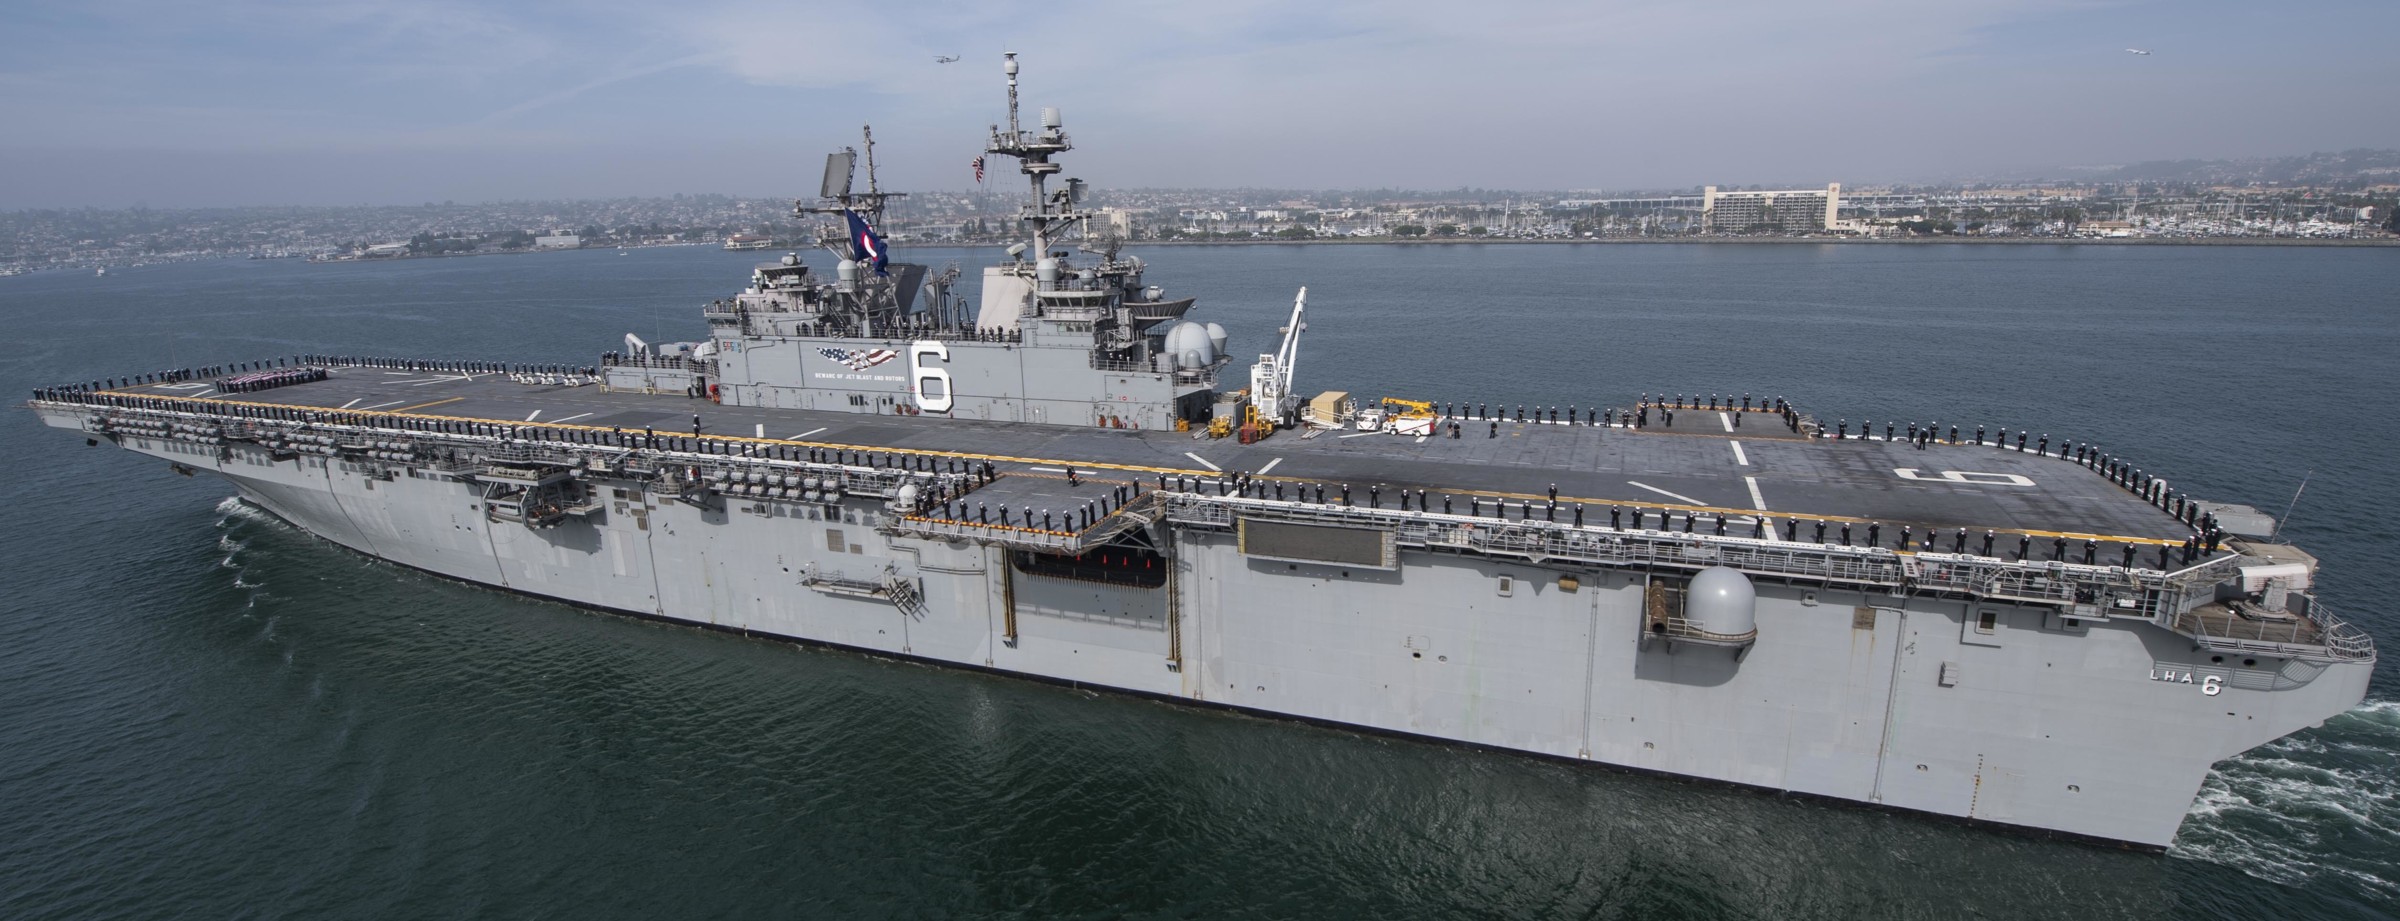 lha-6 uss america amphibious assault ship landing us navy departing naval base san diego california 146